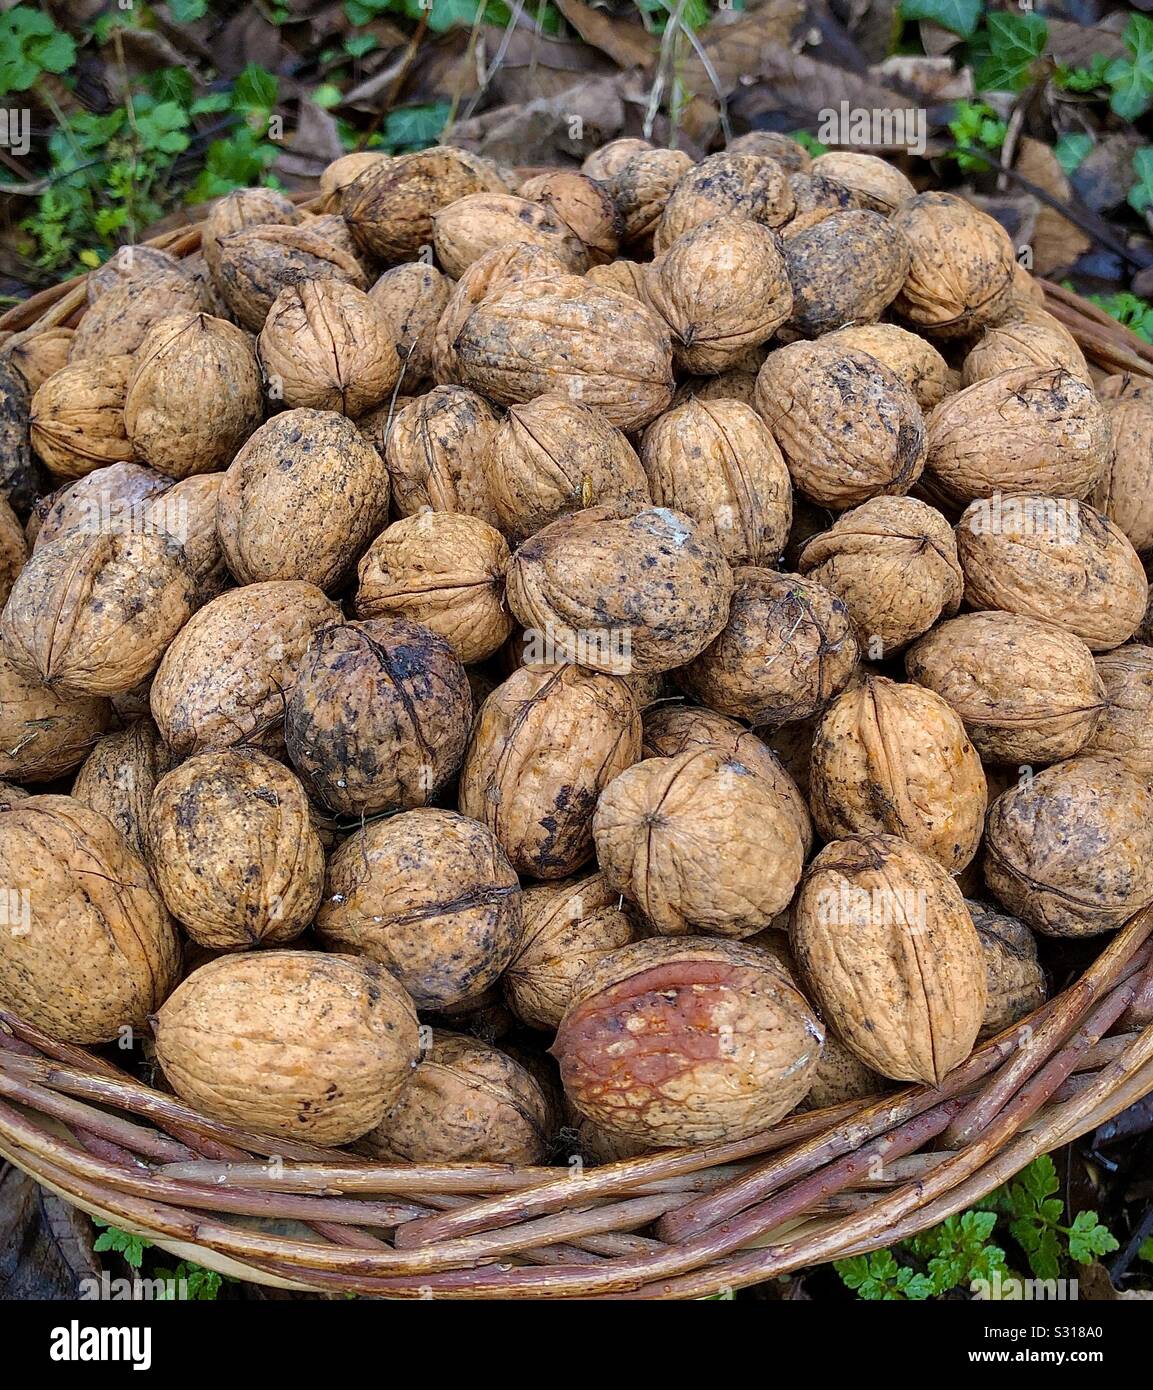 Basket of walnuts. Stock Photo